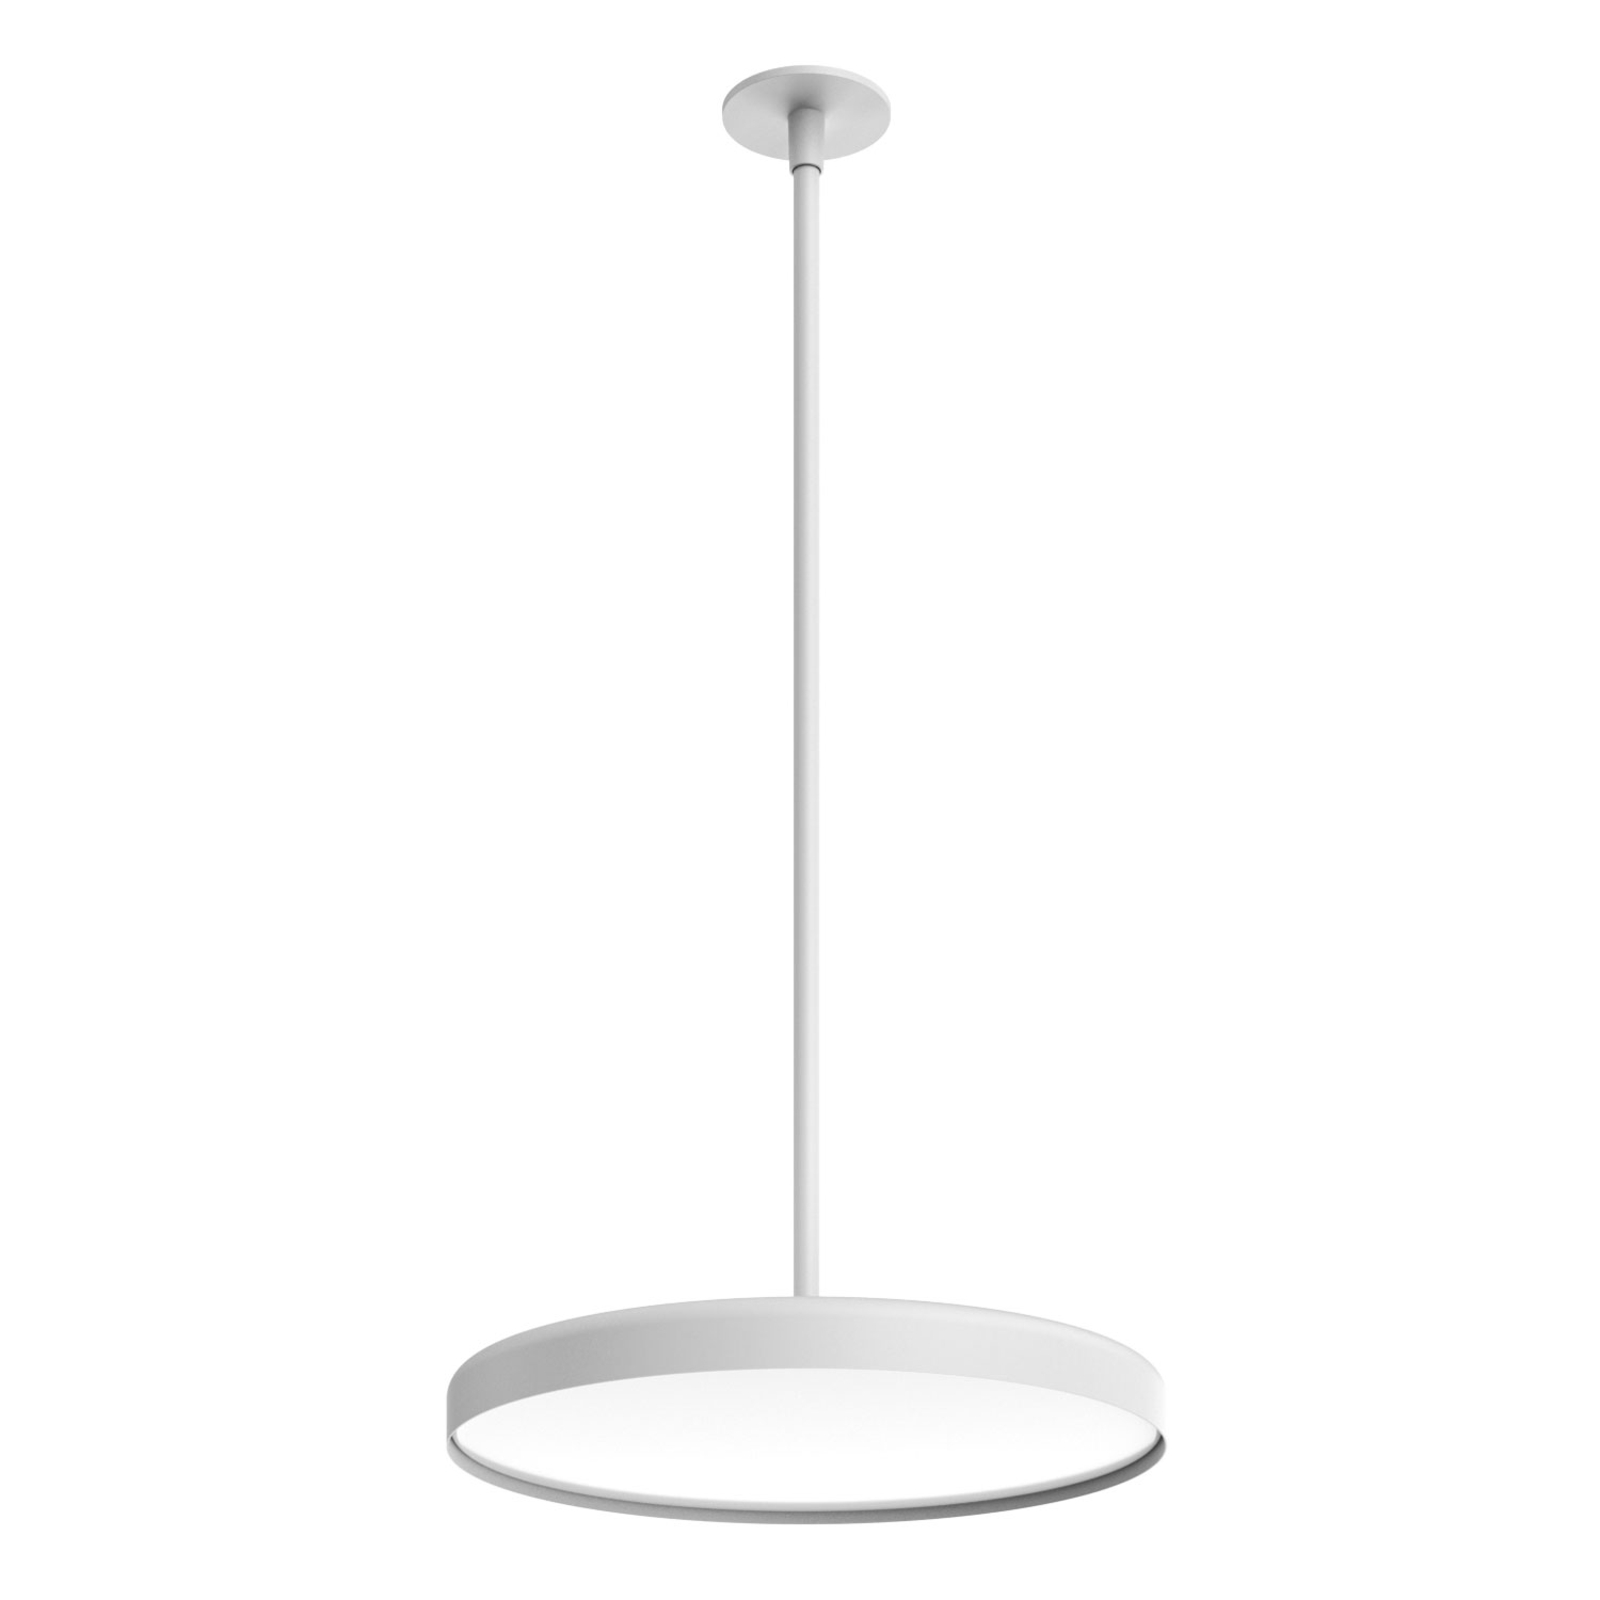 FLOS Infra-Structure C1 lampa sufitowa LED biała